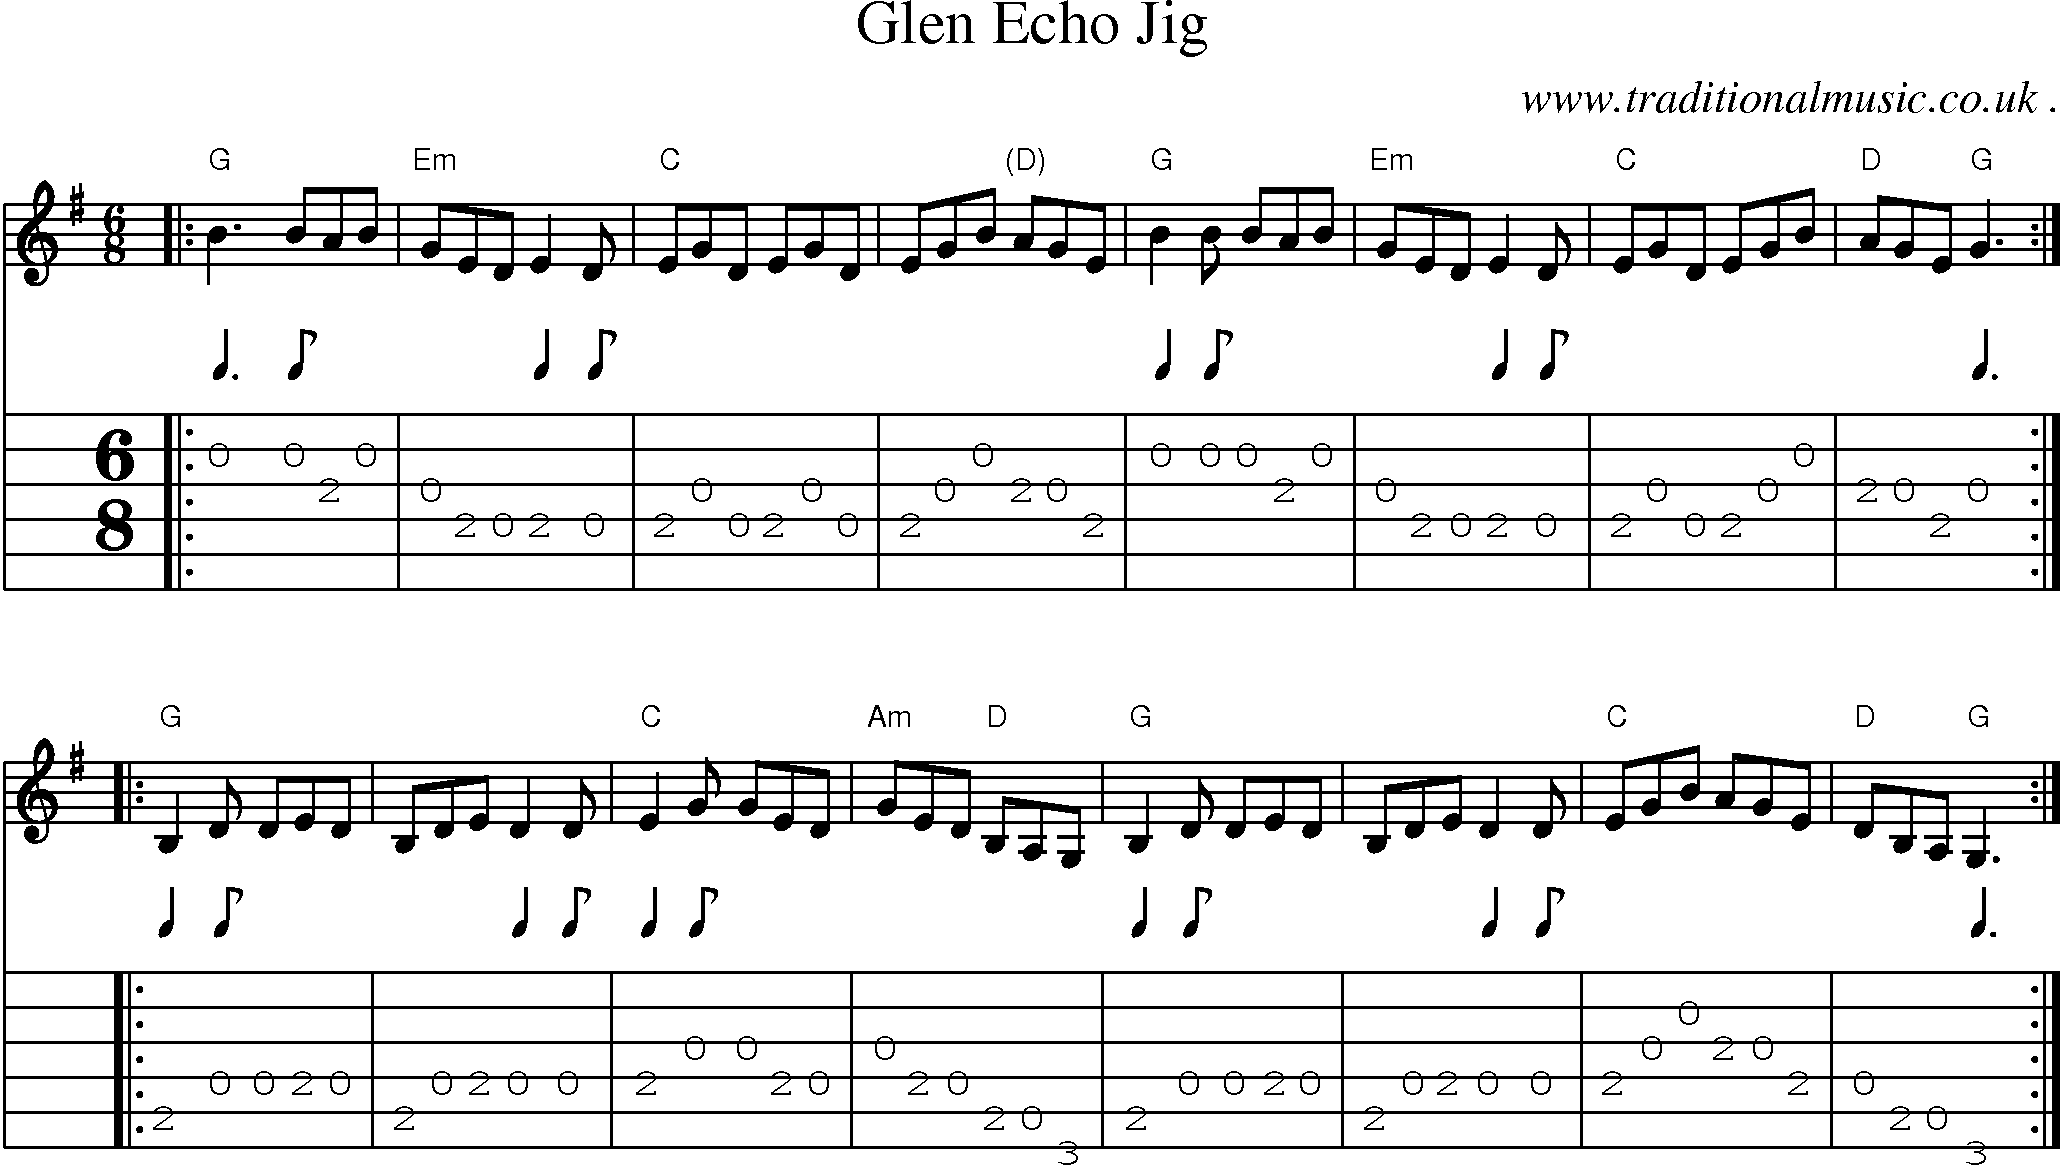 Sheet-music  score, Chords and Guitar Tabs for Glen Echo Jig